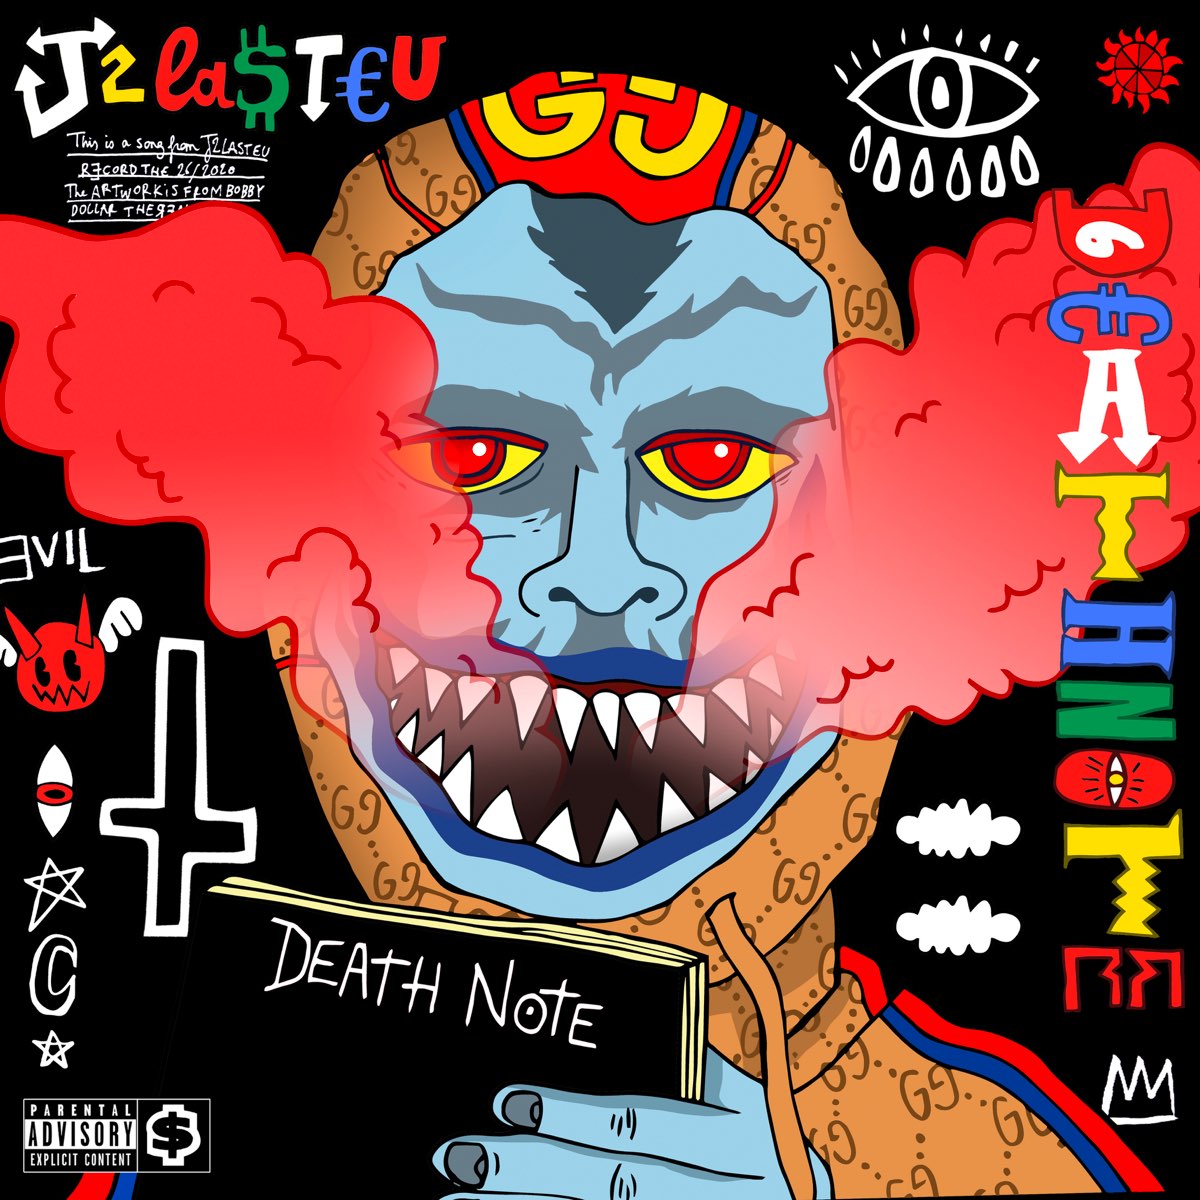 ‎Death Note - Single by J2LASTEU on Apple Music